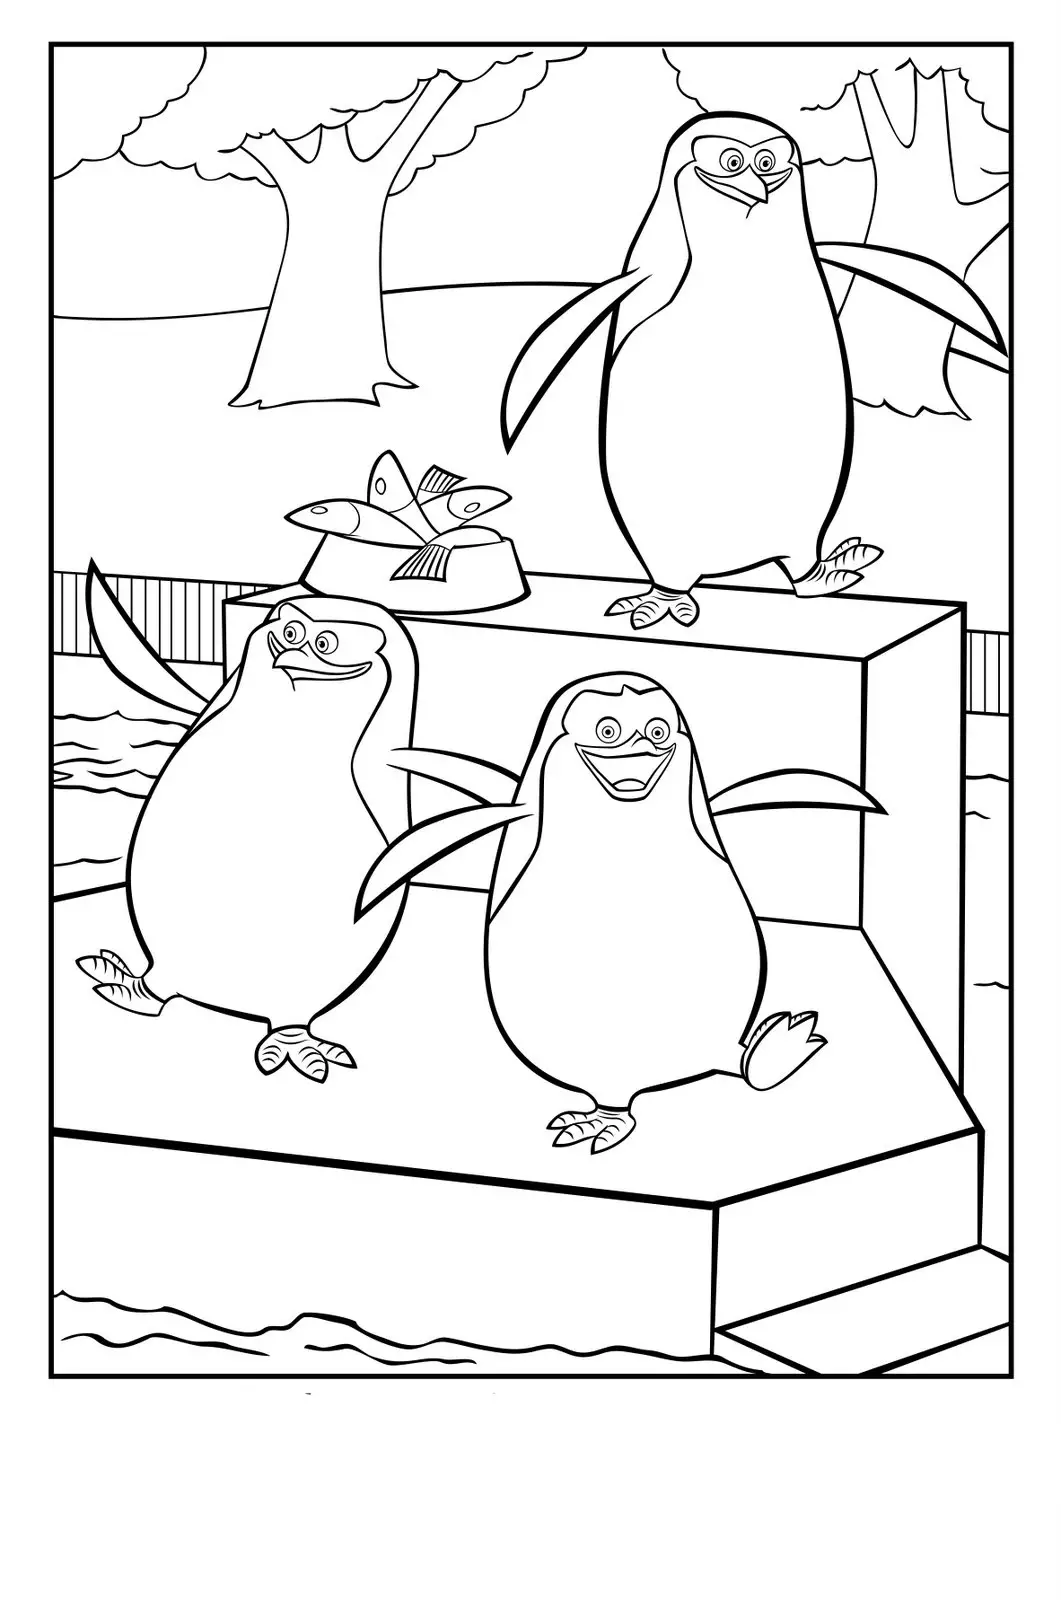 pinguinos de madagascar para colorear